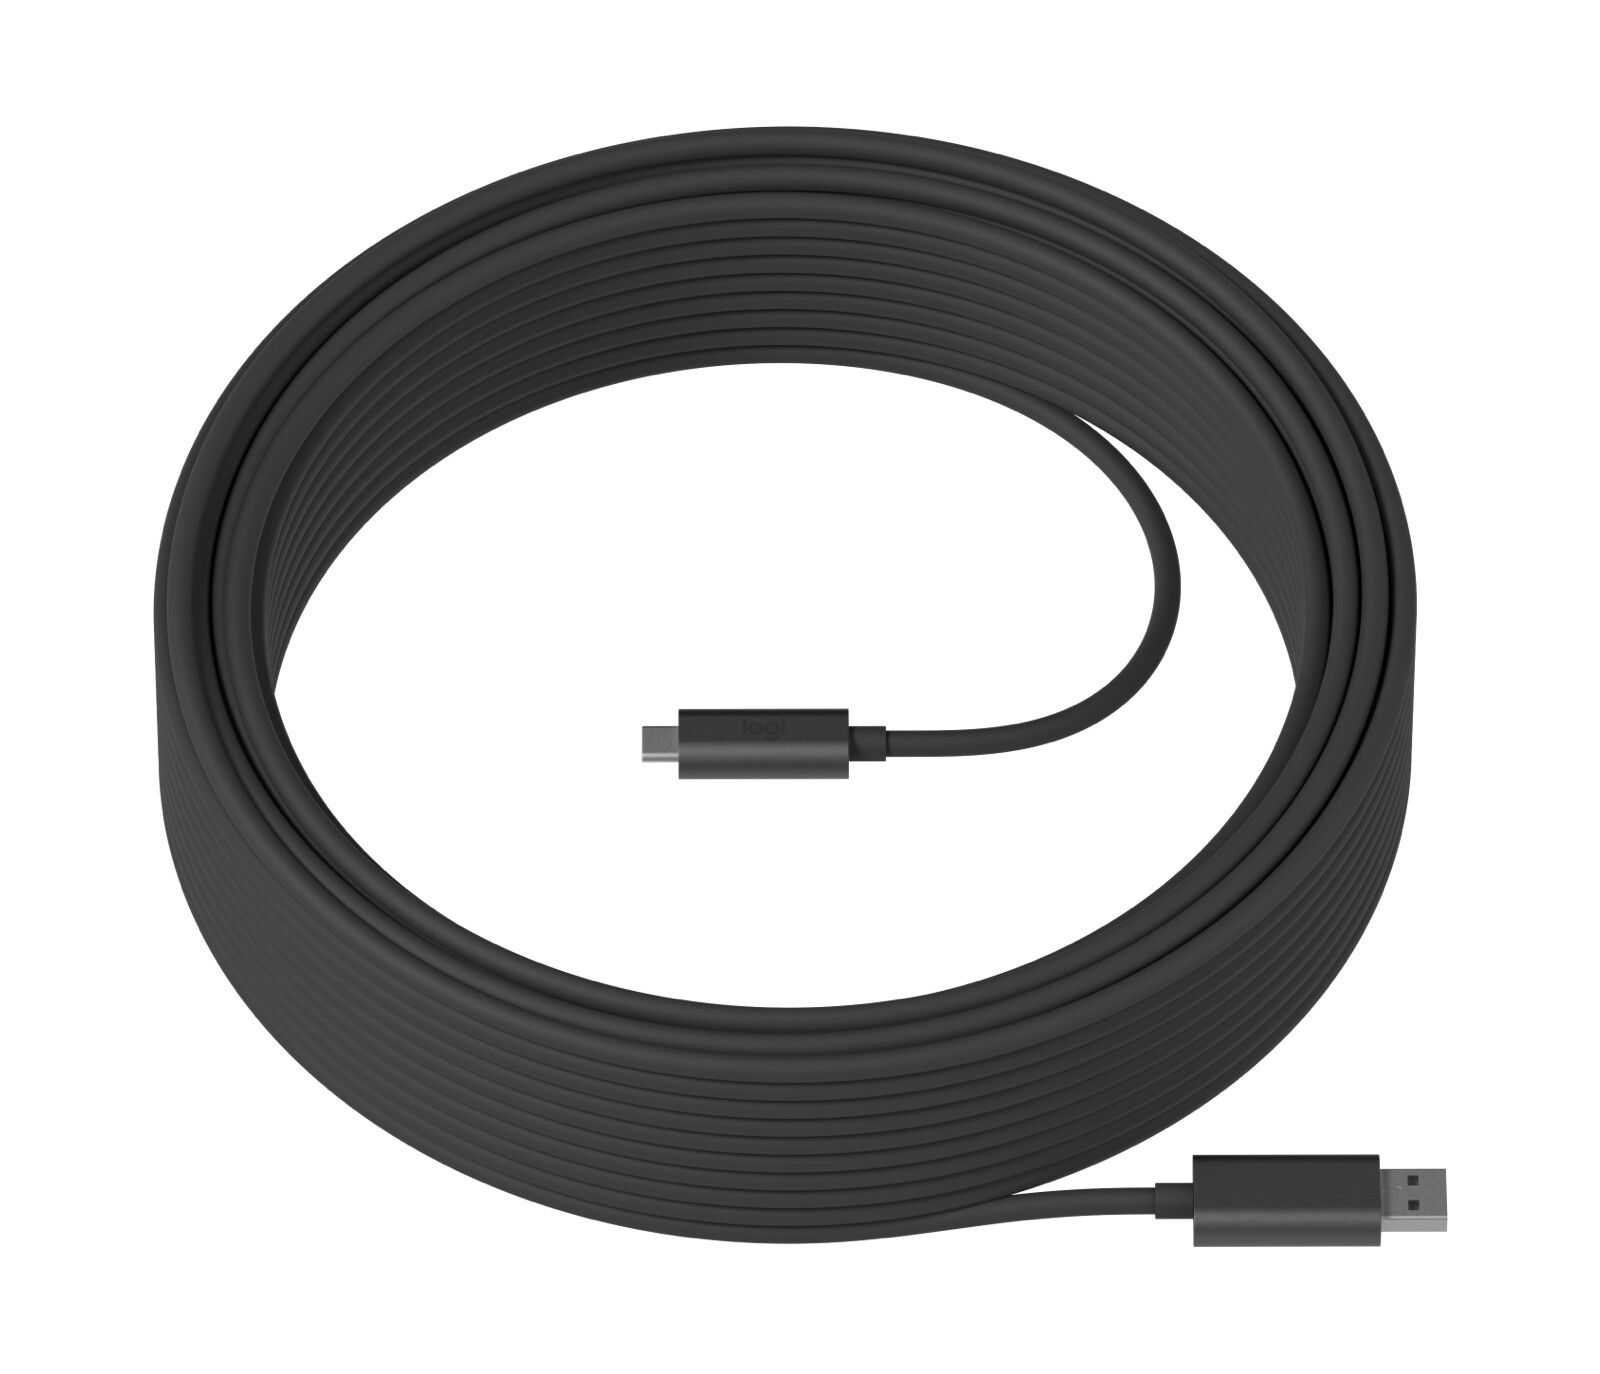 USB-A till USB-C kabel 2m (svart) - USB-kablar 